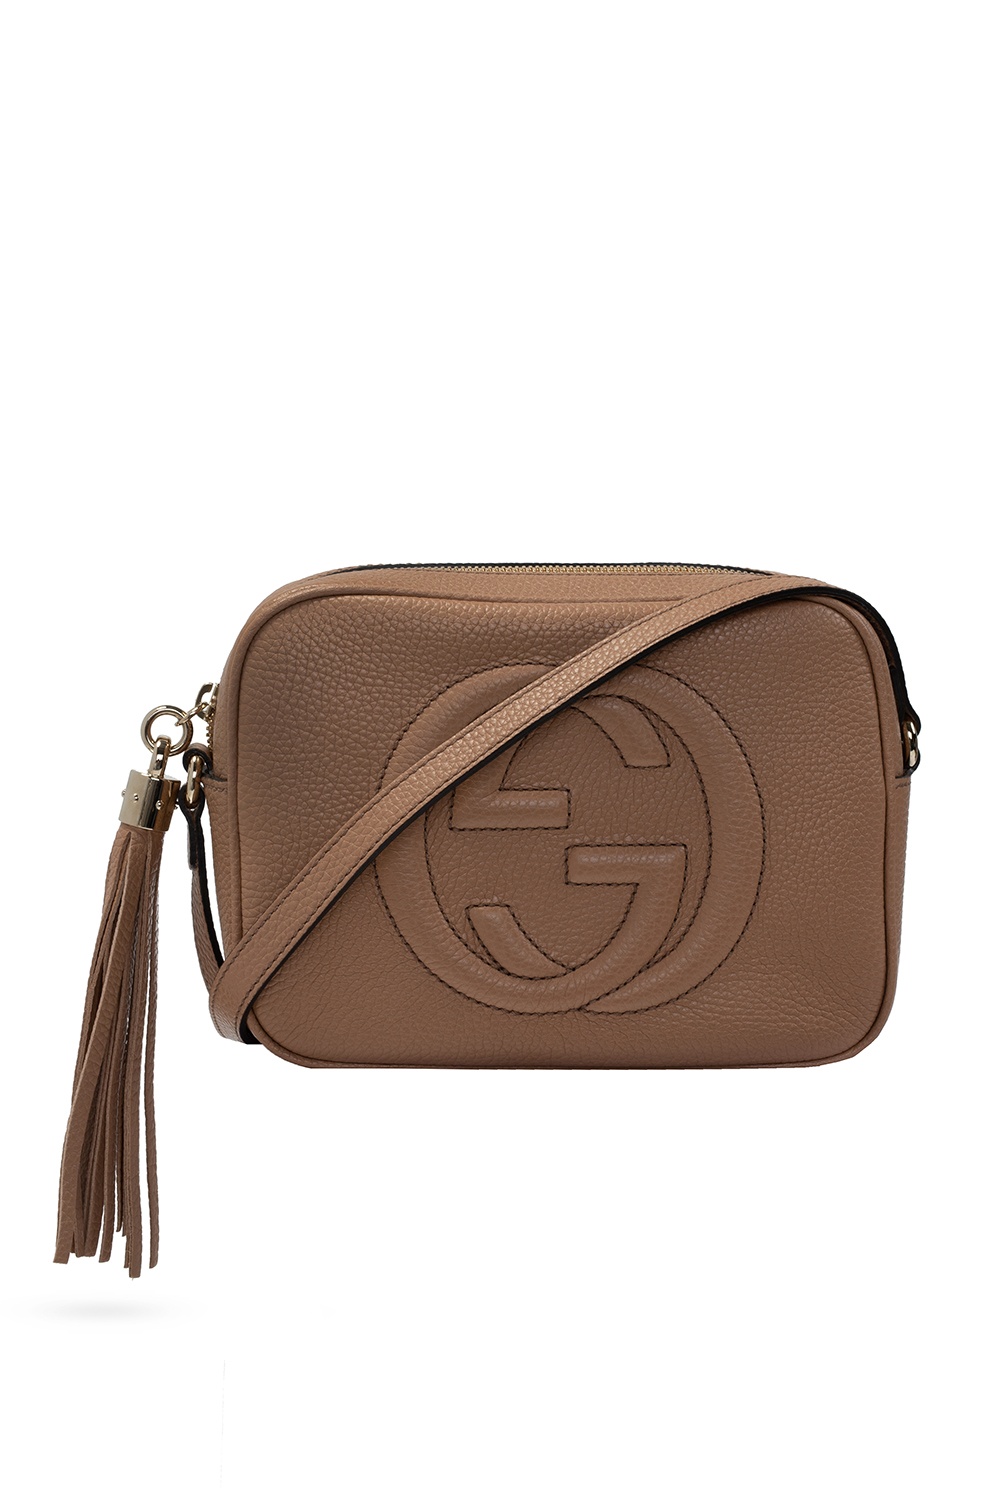 Gucci soho disco bag : r/handbags